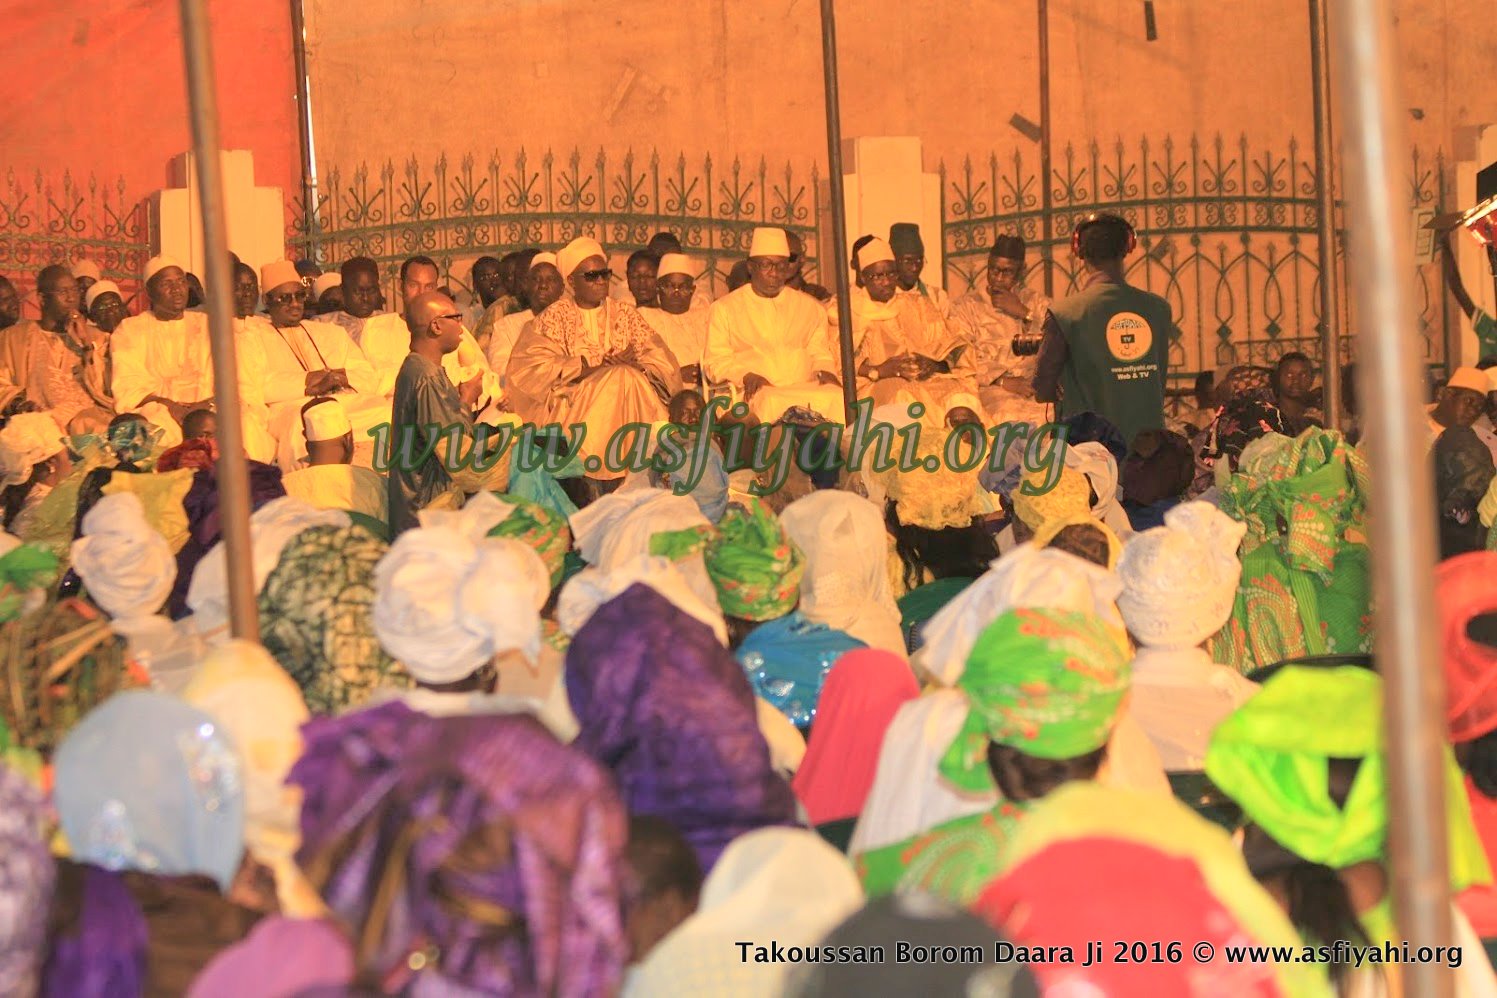 PHOTOS - 29 MAI 2016 À TIVAOUANE - Les Images du Takoussane Borom Daara Yi 2016, organisé par Serigne Pape Malick Diop Ibn Sokhna Kala Mbaye 